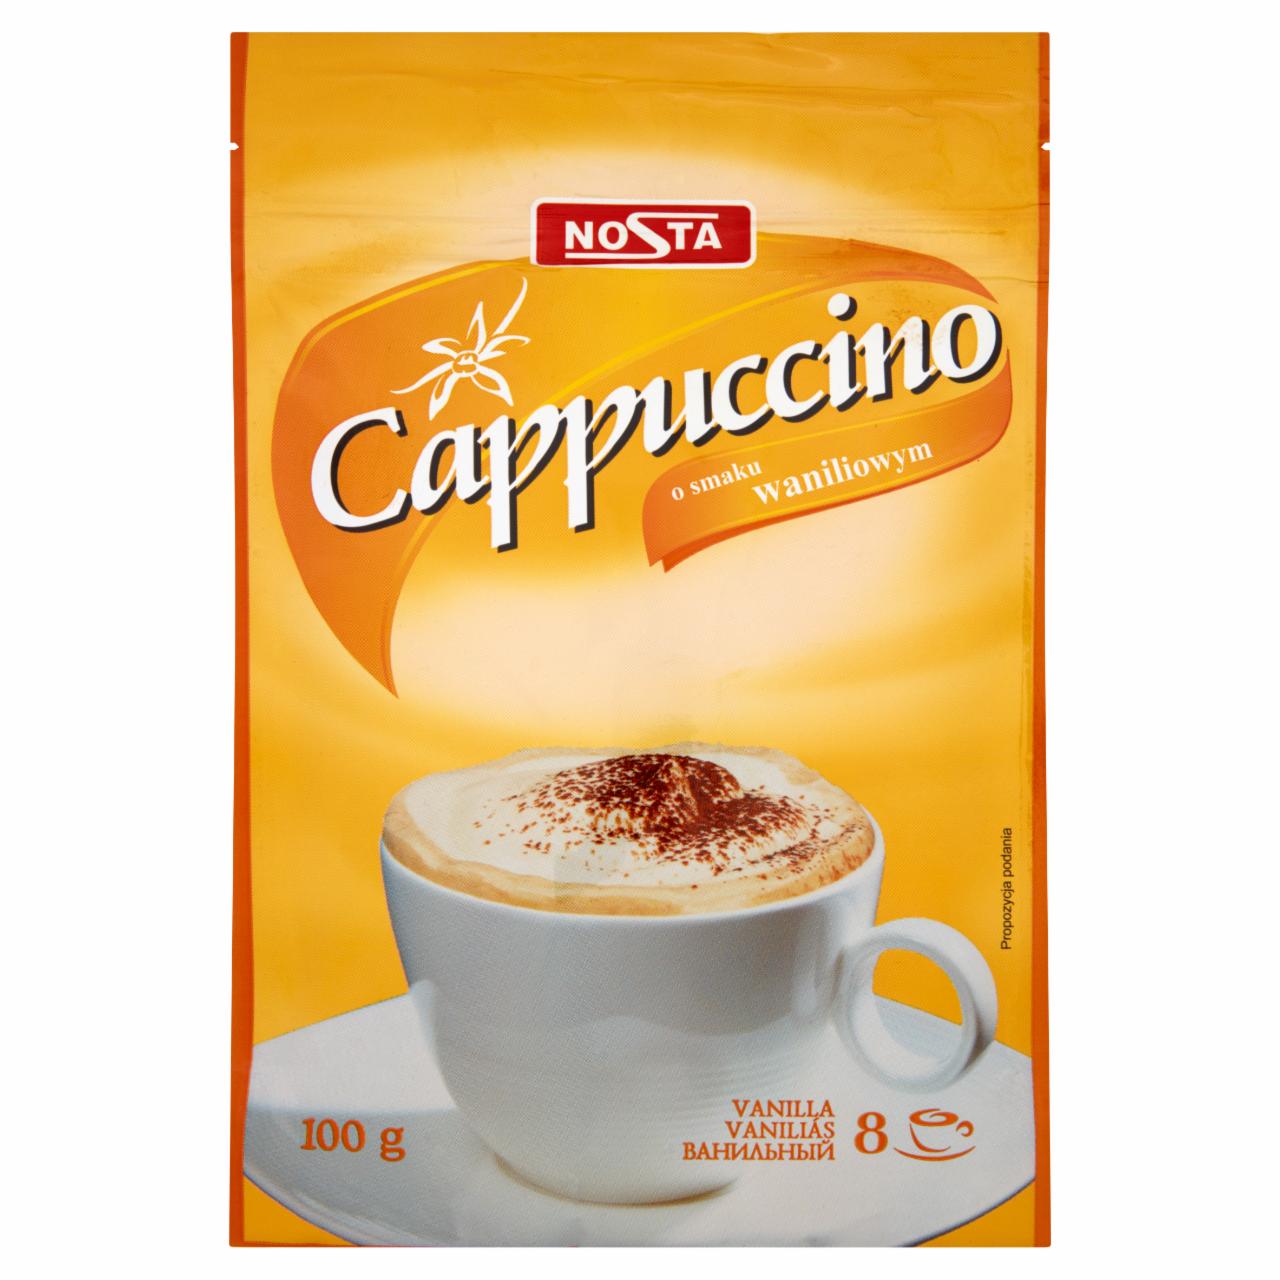 Képek - Cappuccino vanília Nosta